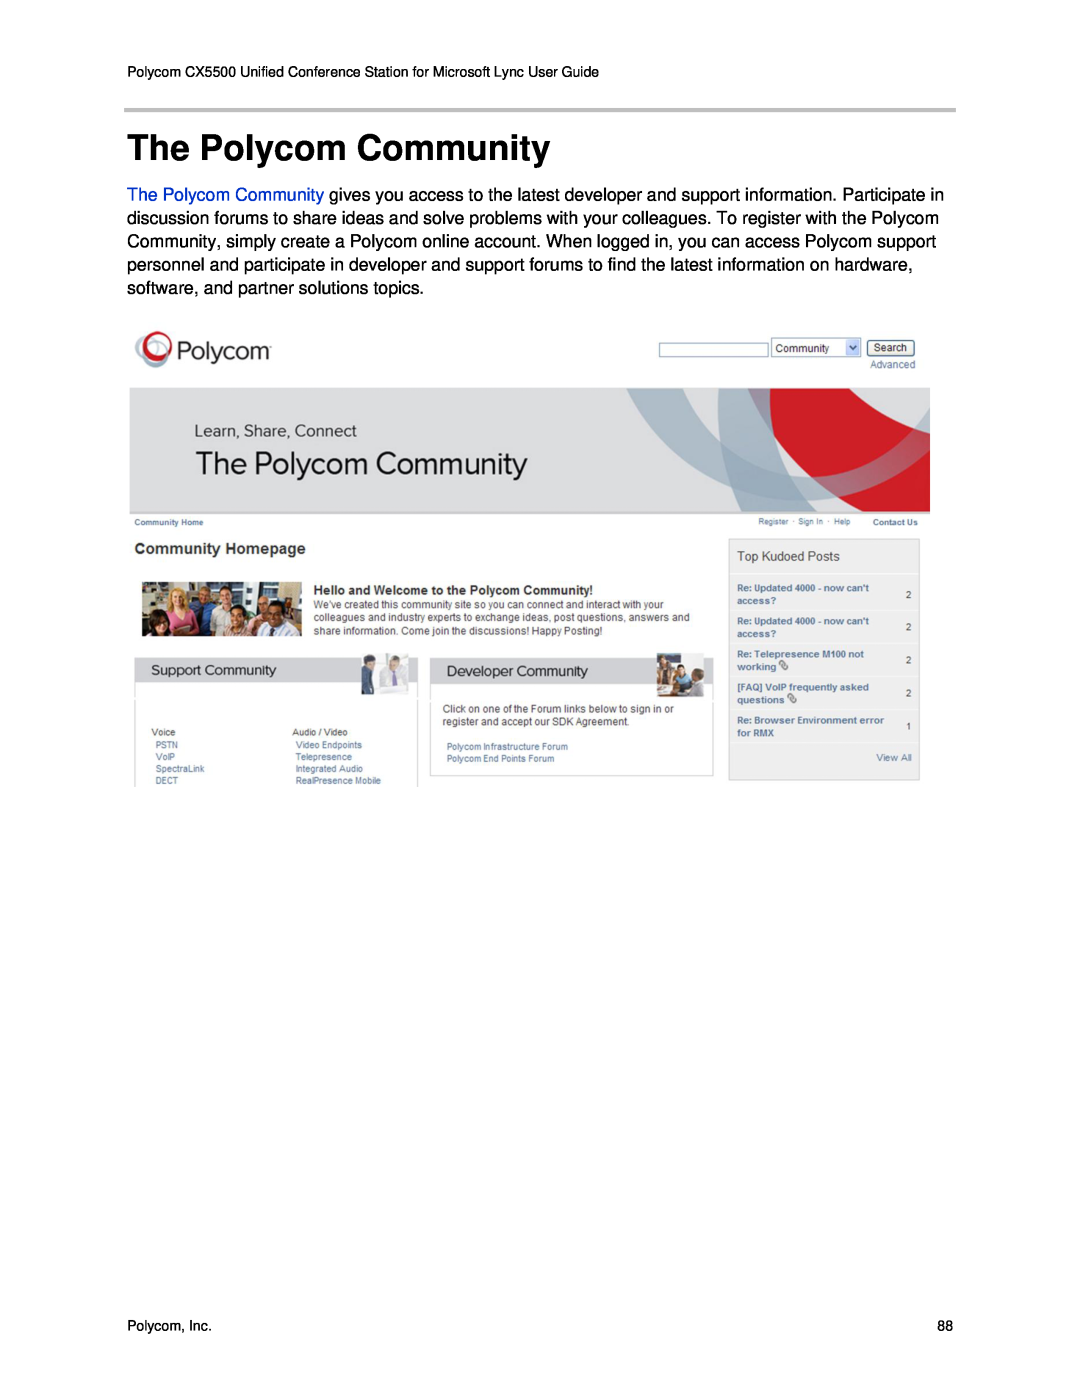 Polycom CX5500 manual The Polycom Community 